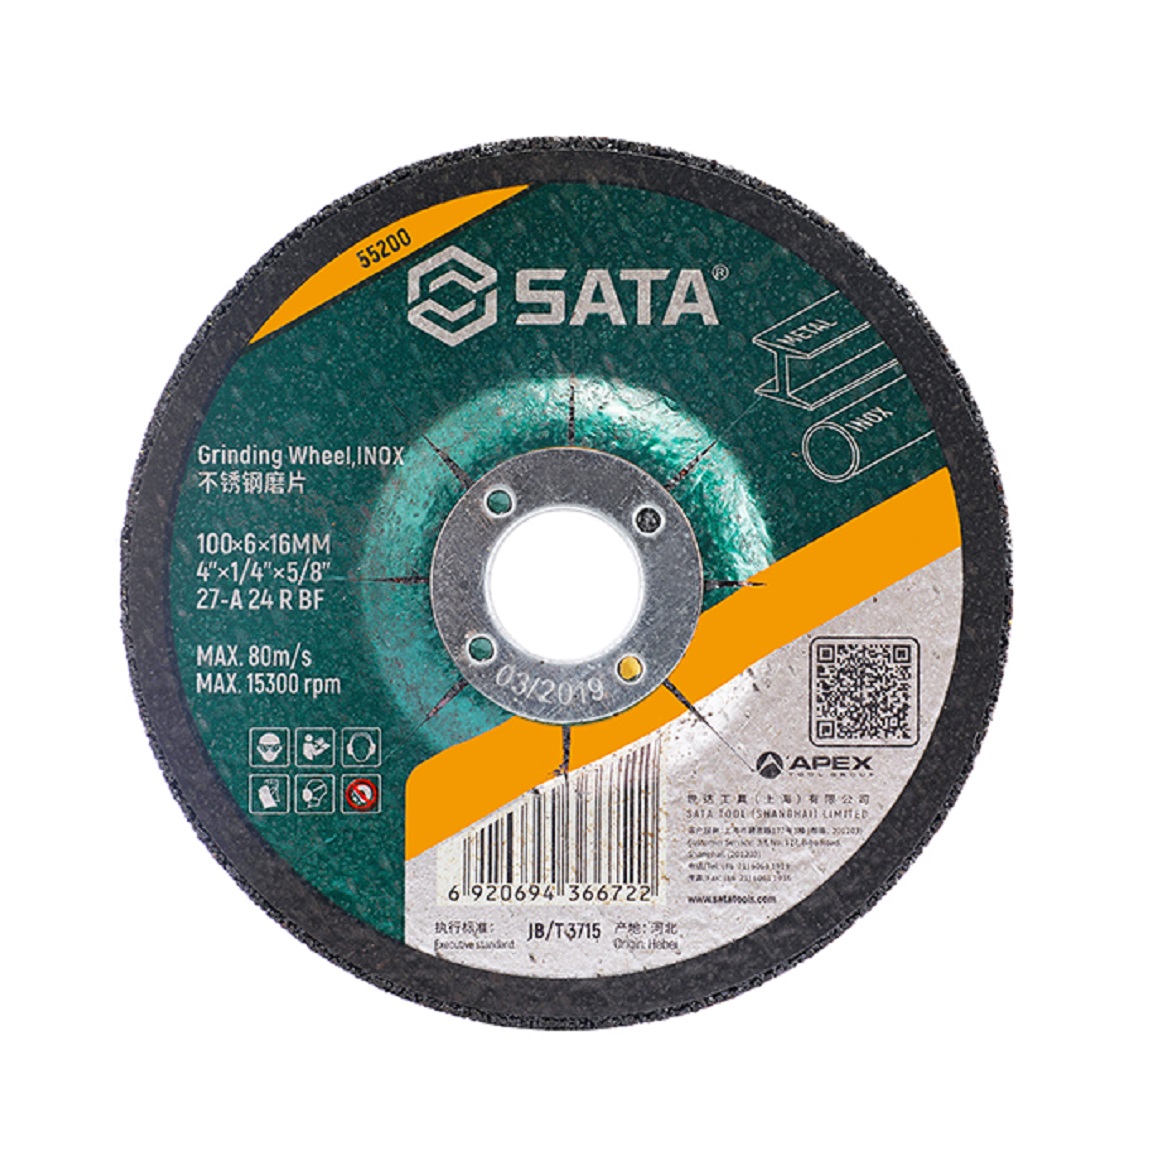 SATA Grinding Wheel